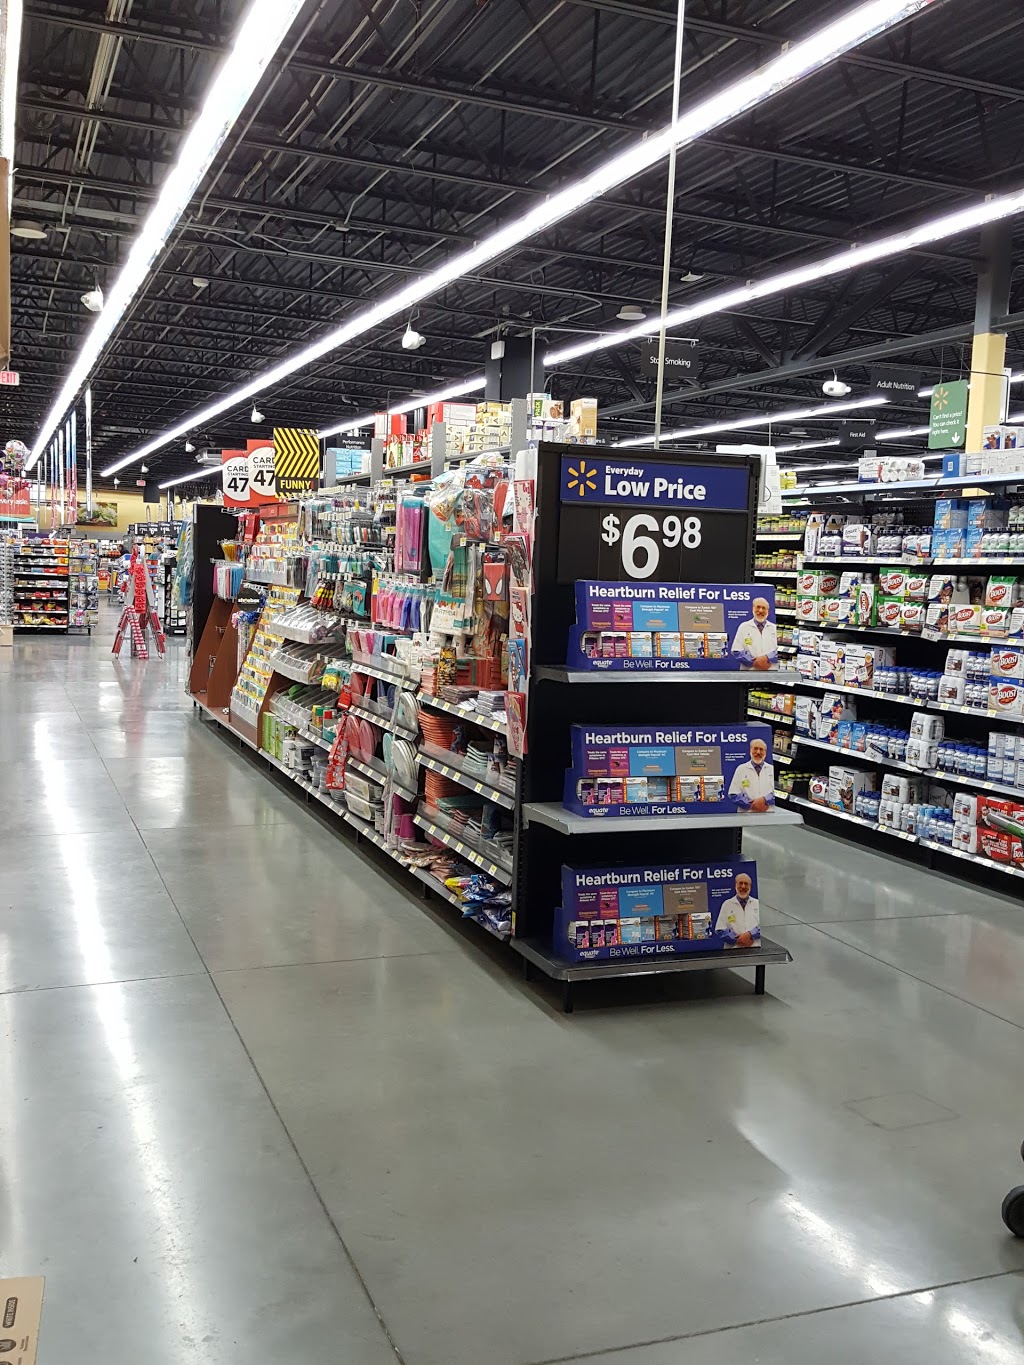 Walmart Neighborhood Market | 5835 W 10th St, Indianapolis, IN 46224, USA | Phone: (317) 554-8960